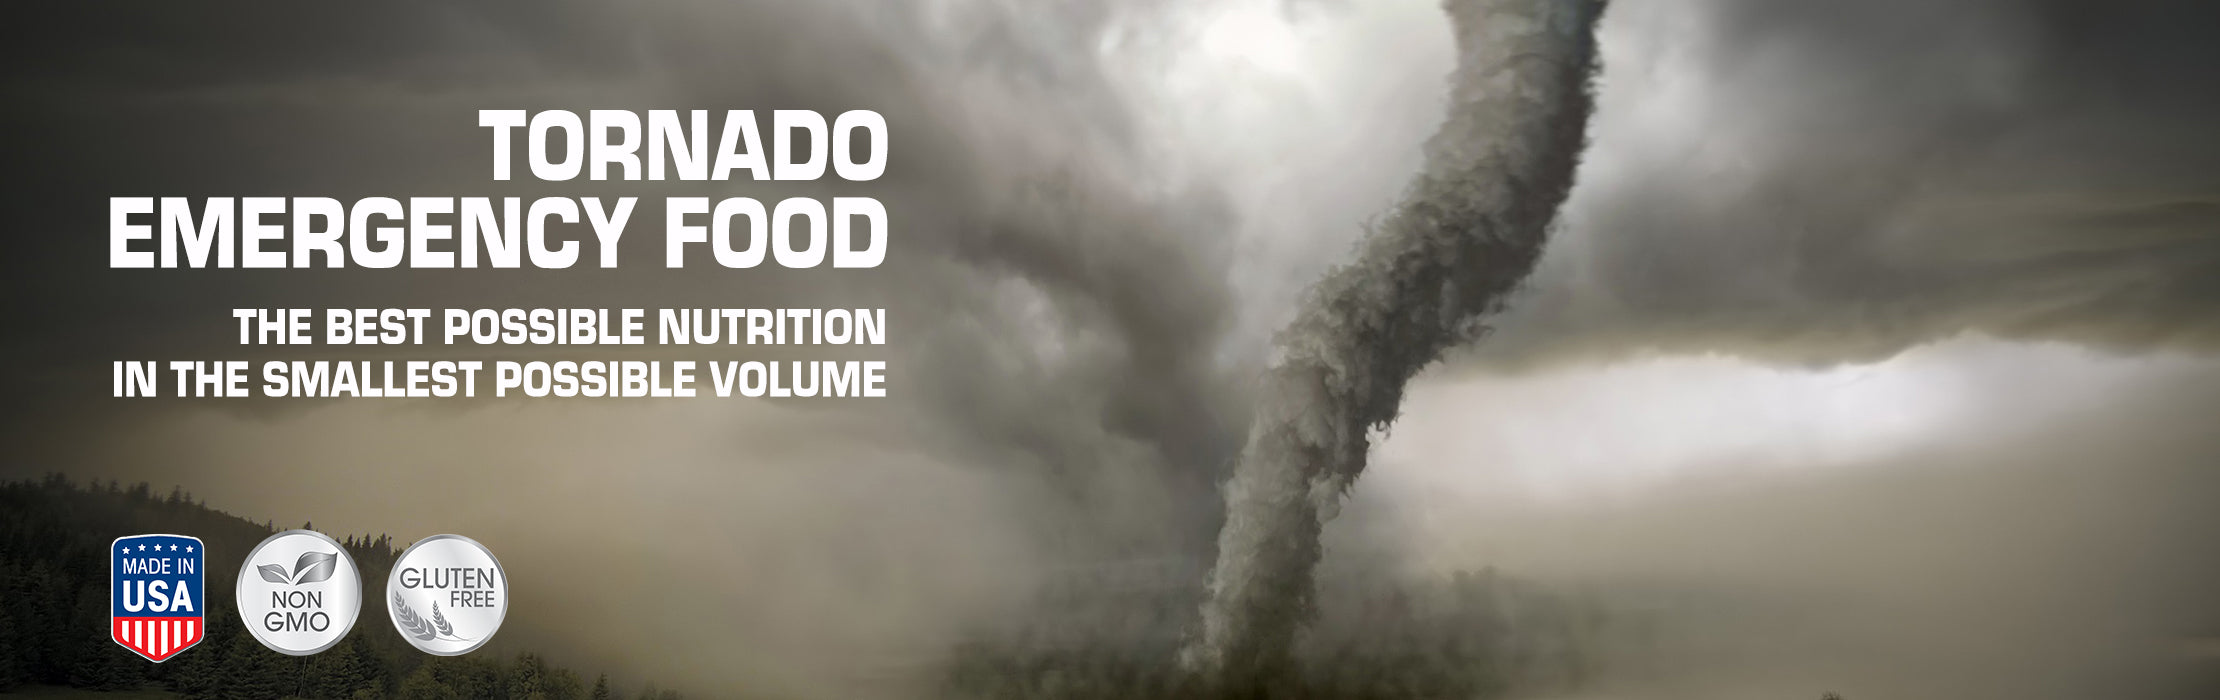 Tornado Emergency Food